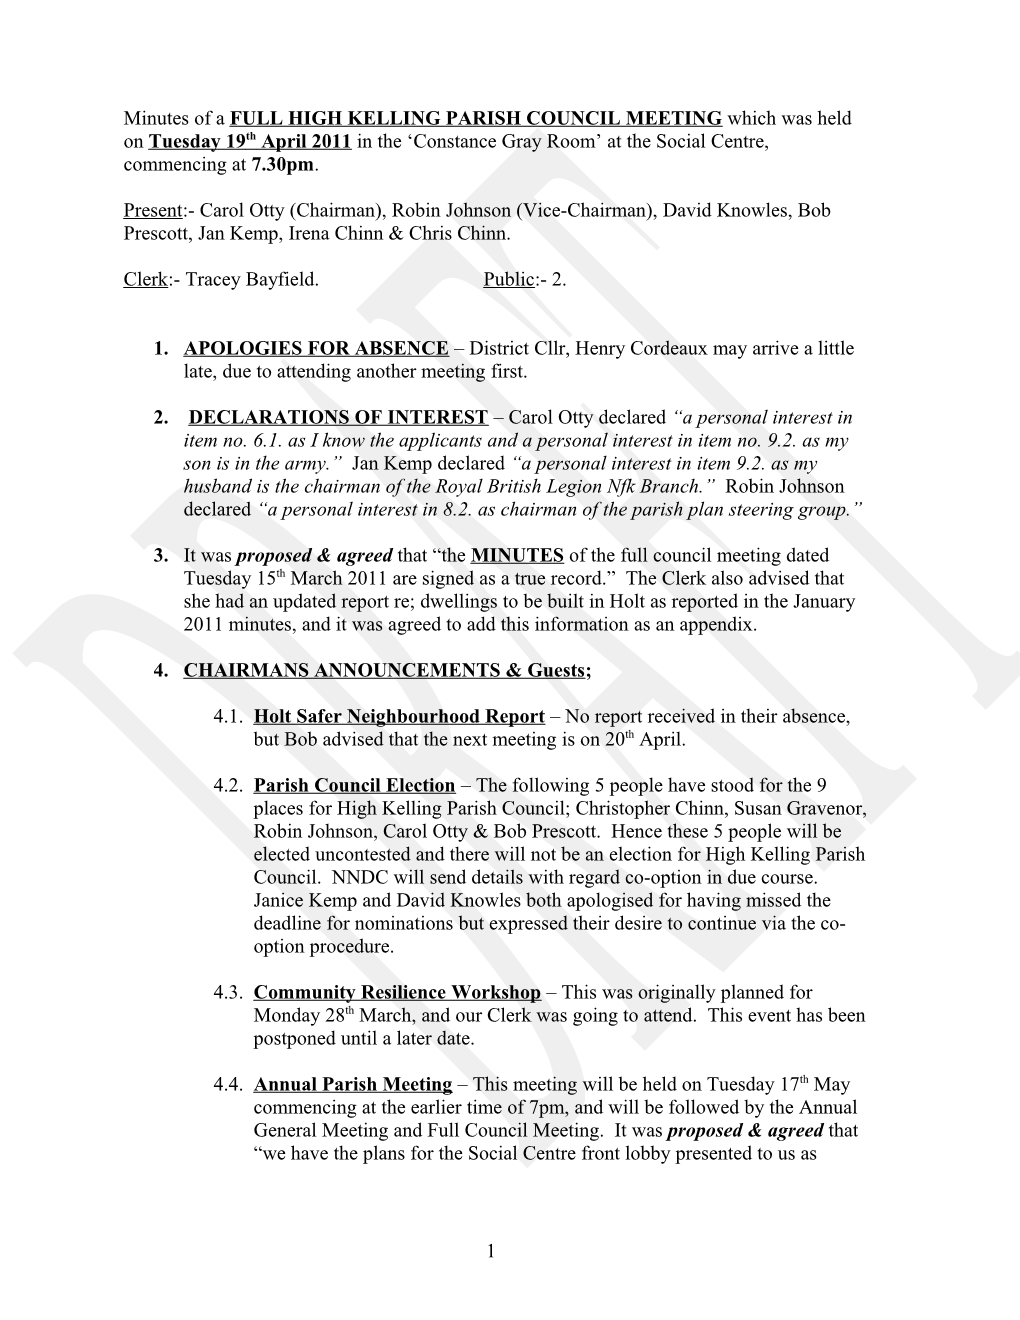 High Kelling Parish Council Notice s1